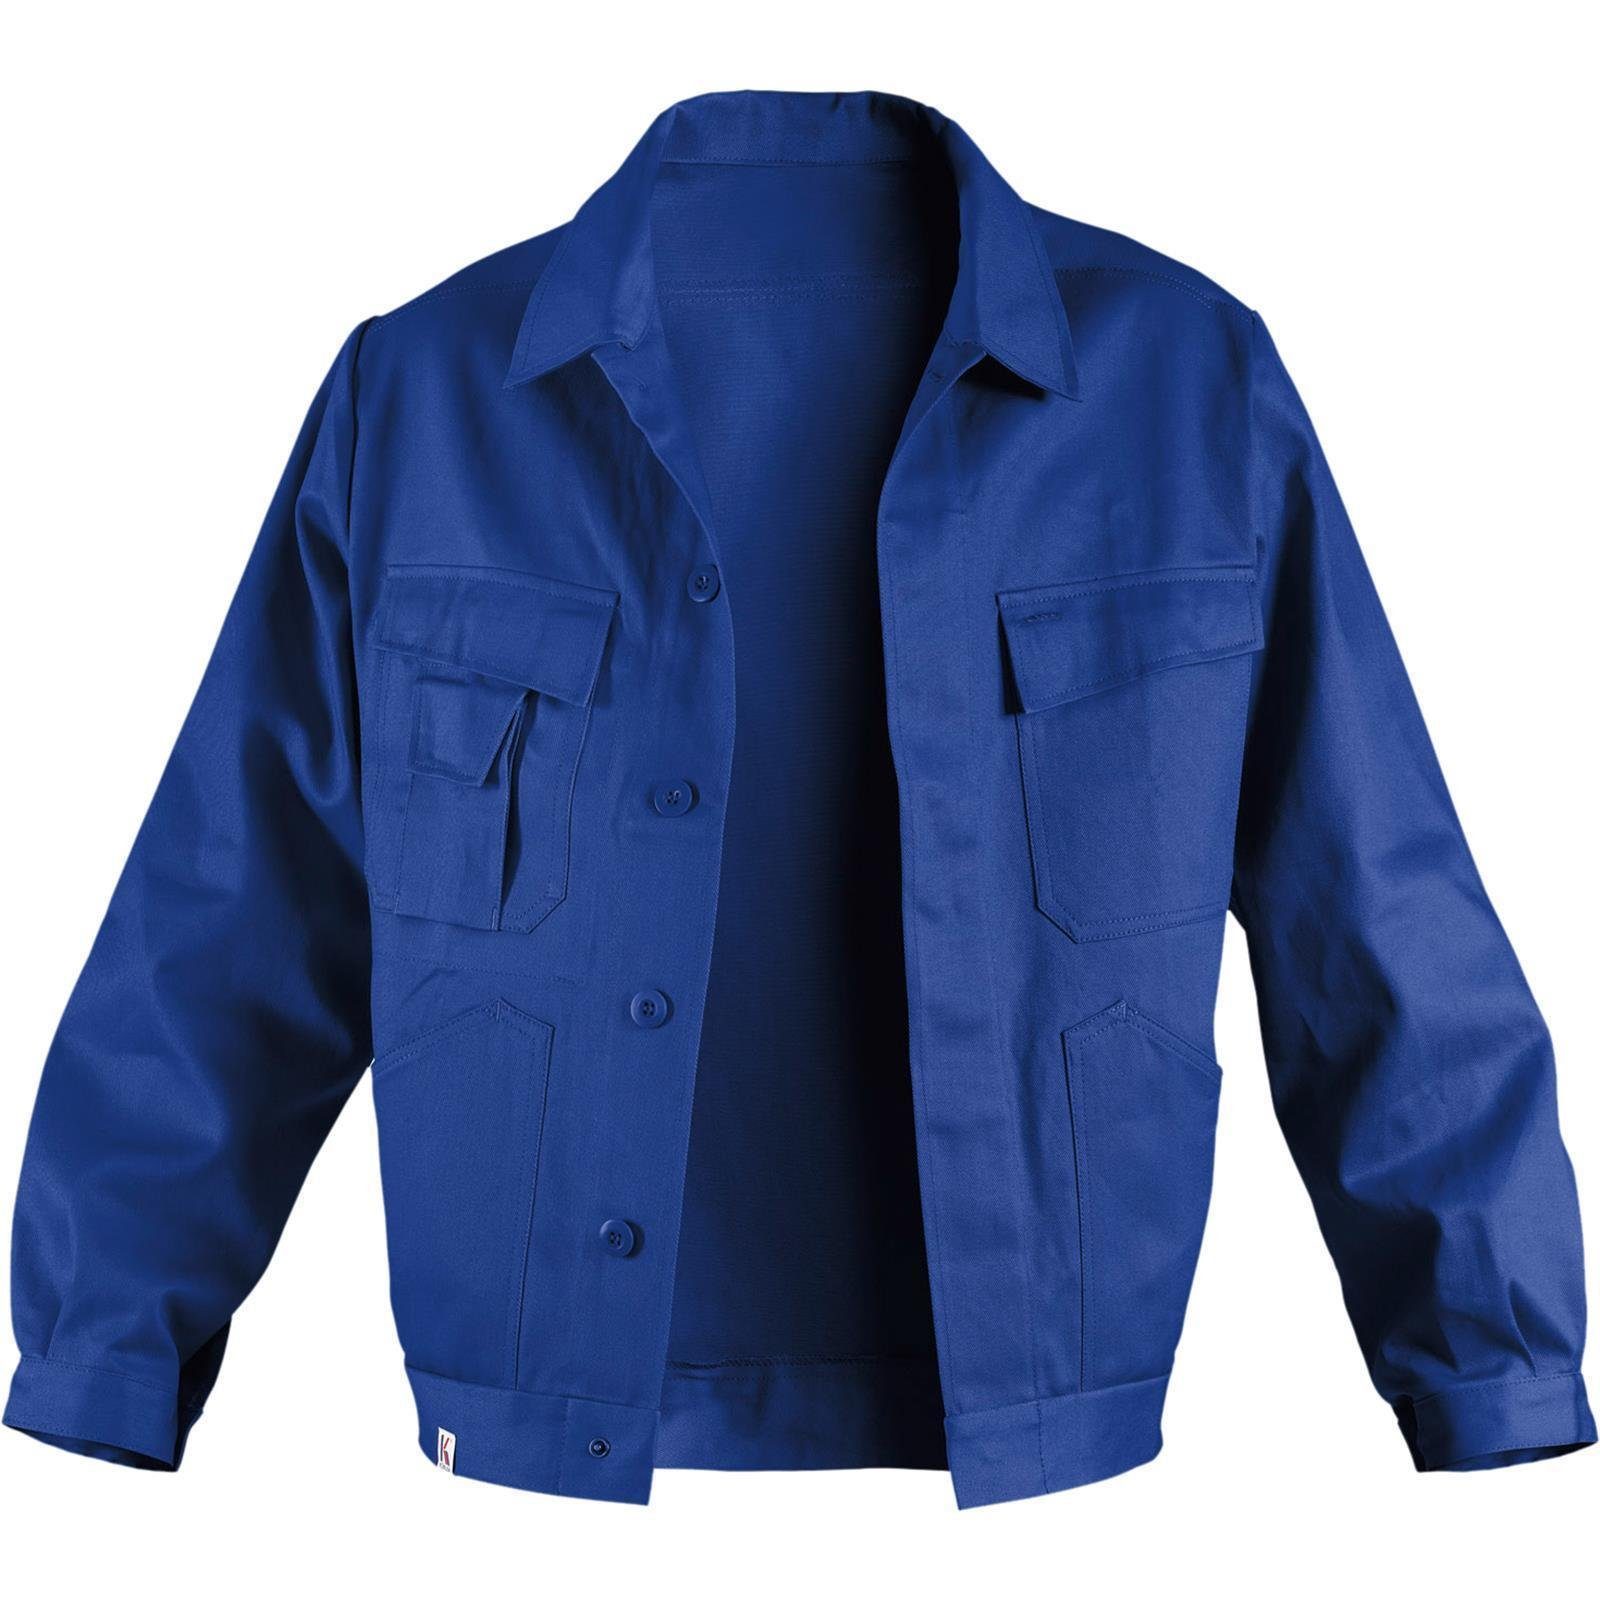 Kübler Arbeitsjacke Kübler Jacke kornblau 100%Baumwolle | Arbeitsjacken